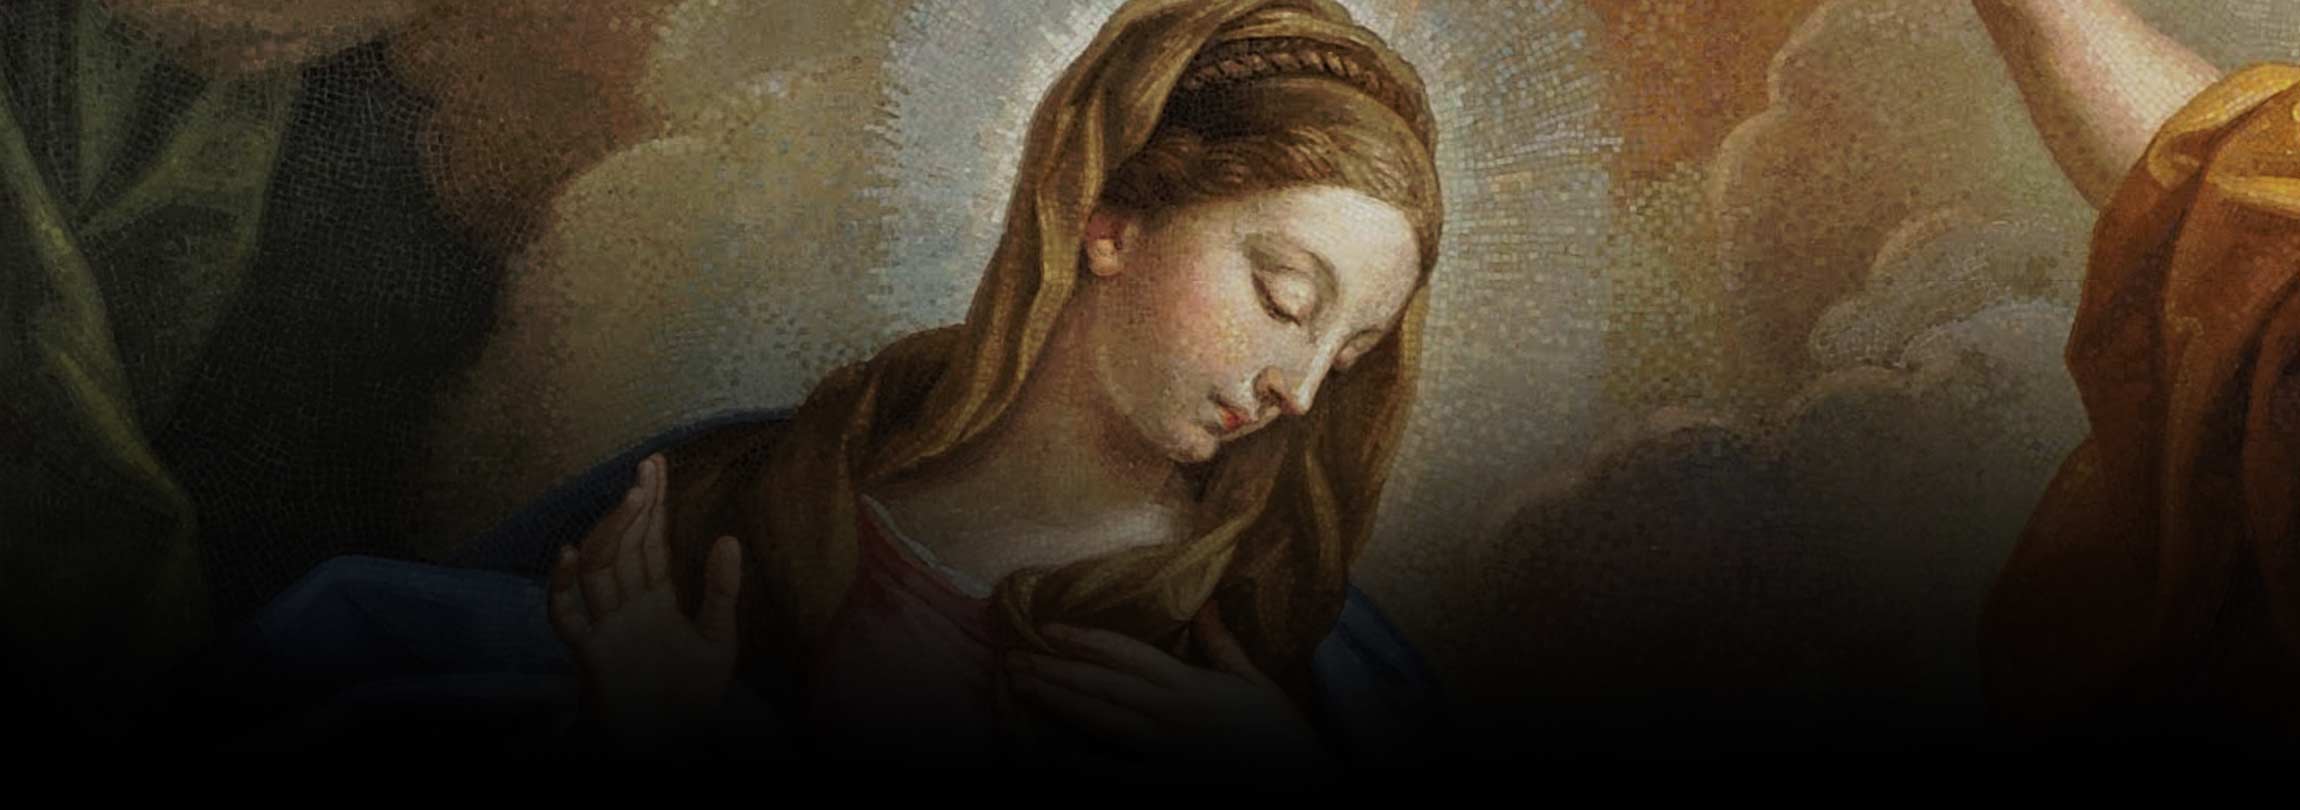 Maria: o segredo das famílias santas